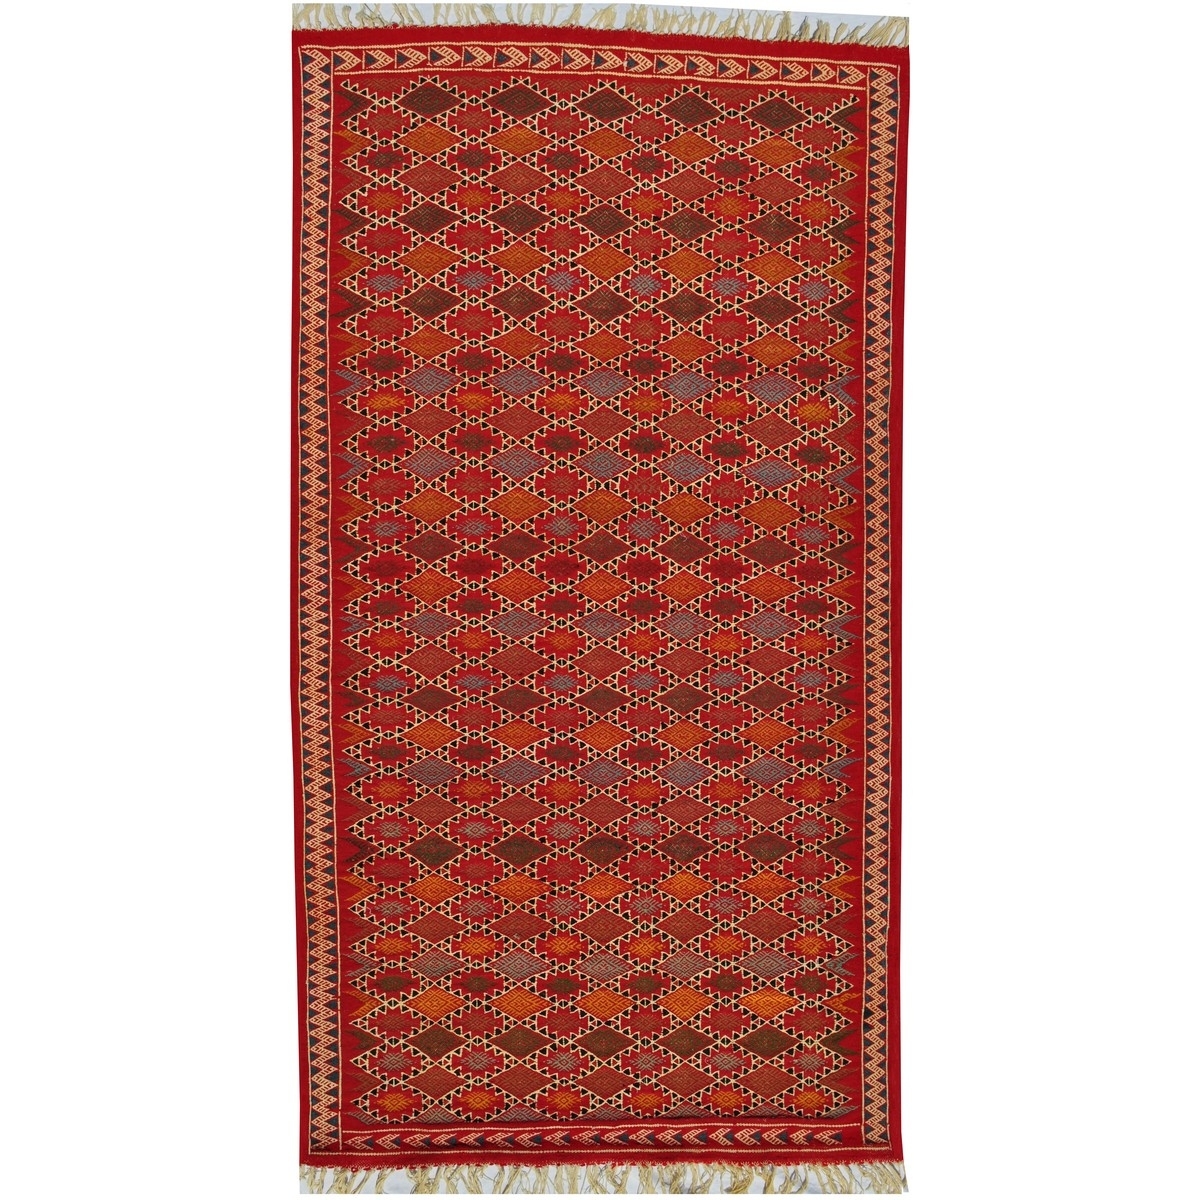 Tapis berbère Tapis Kilim Sultan 100x205 Multicolore (Tissé main, Laine, Tunisie) Tapis kilim tunisien style tapis marocain. Tap